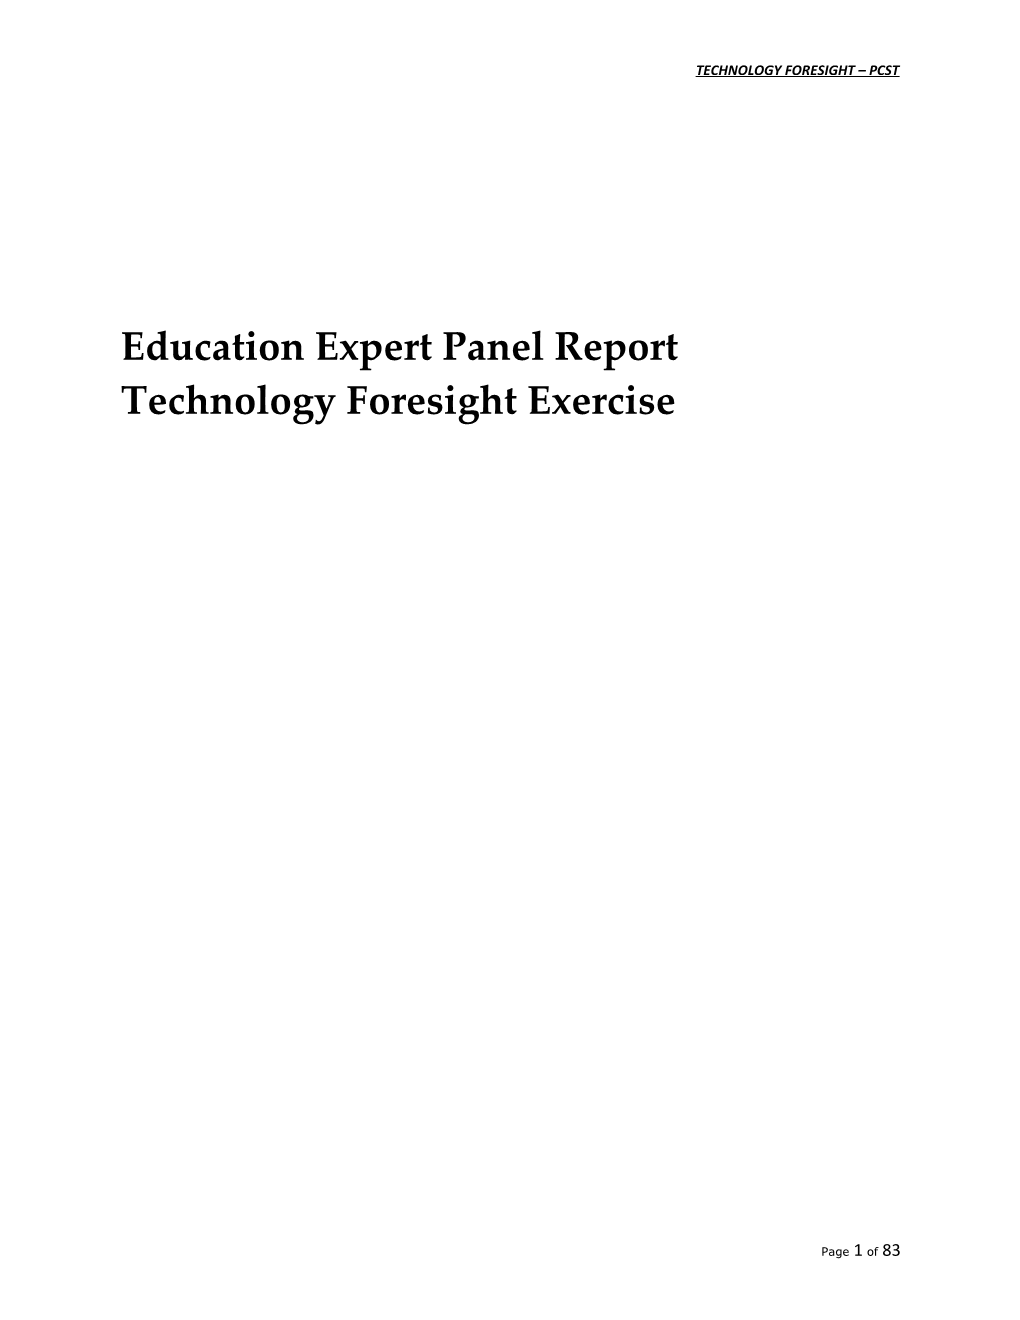 Education Expert Panel Report